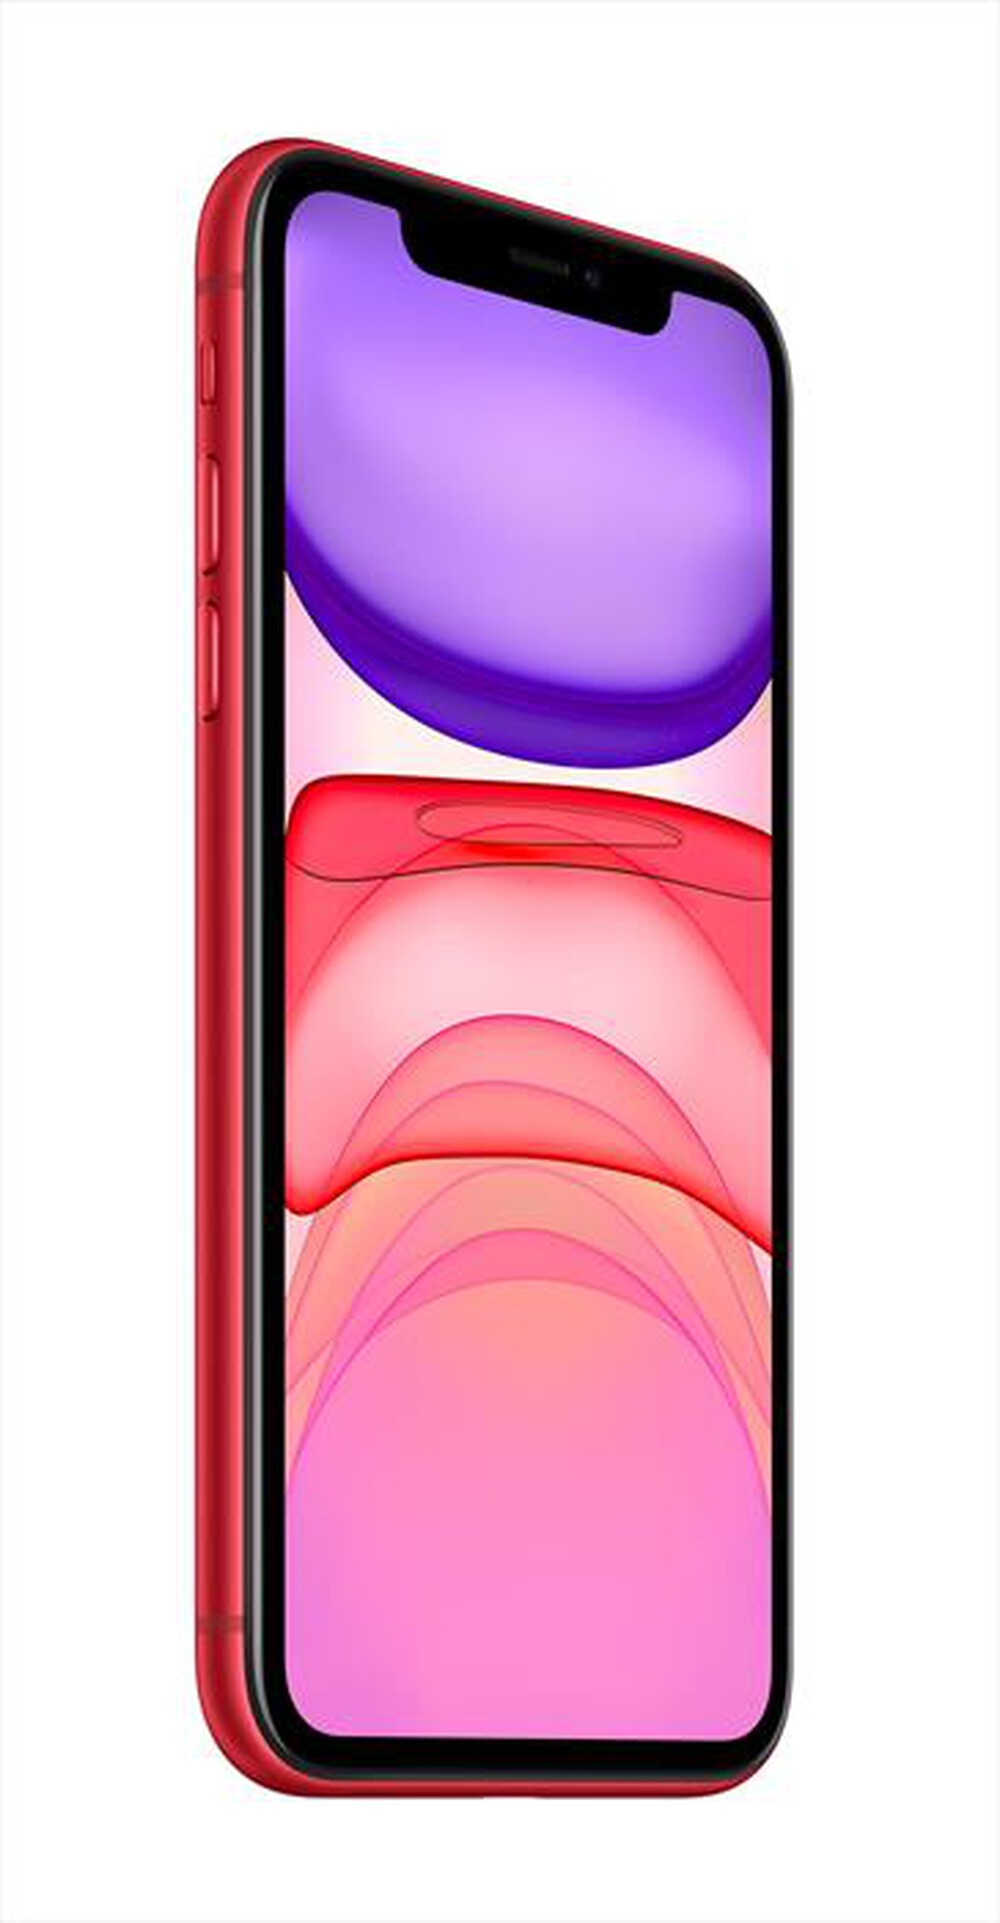 "APPLE - iPhone 11 128GB (Senza accessori)-(PRODUCT)RED"